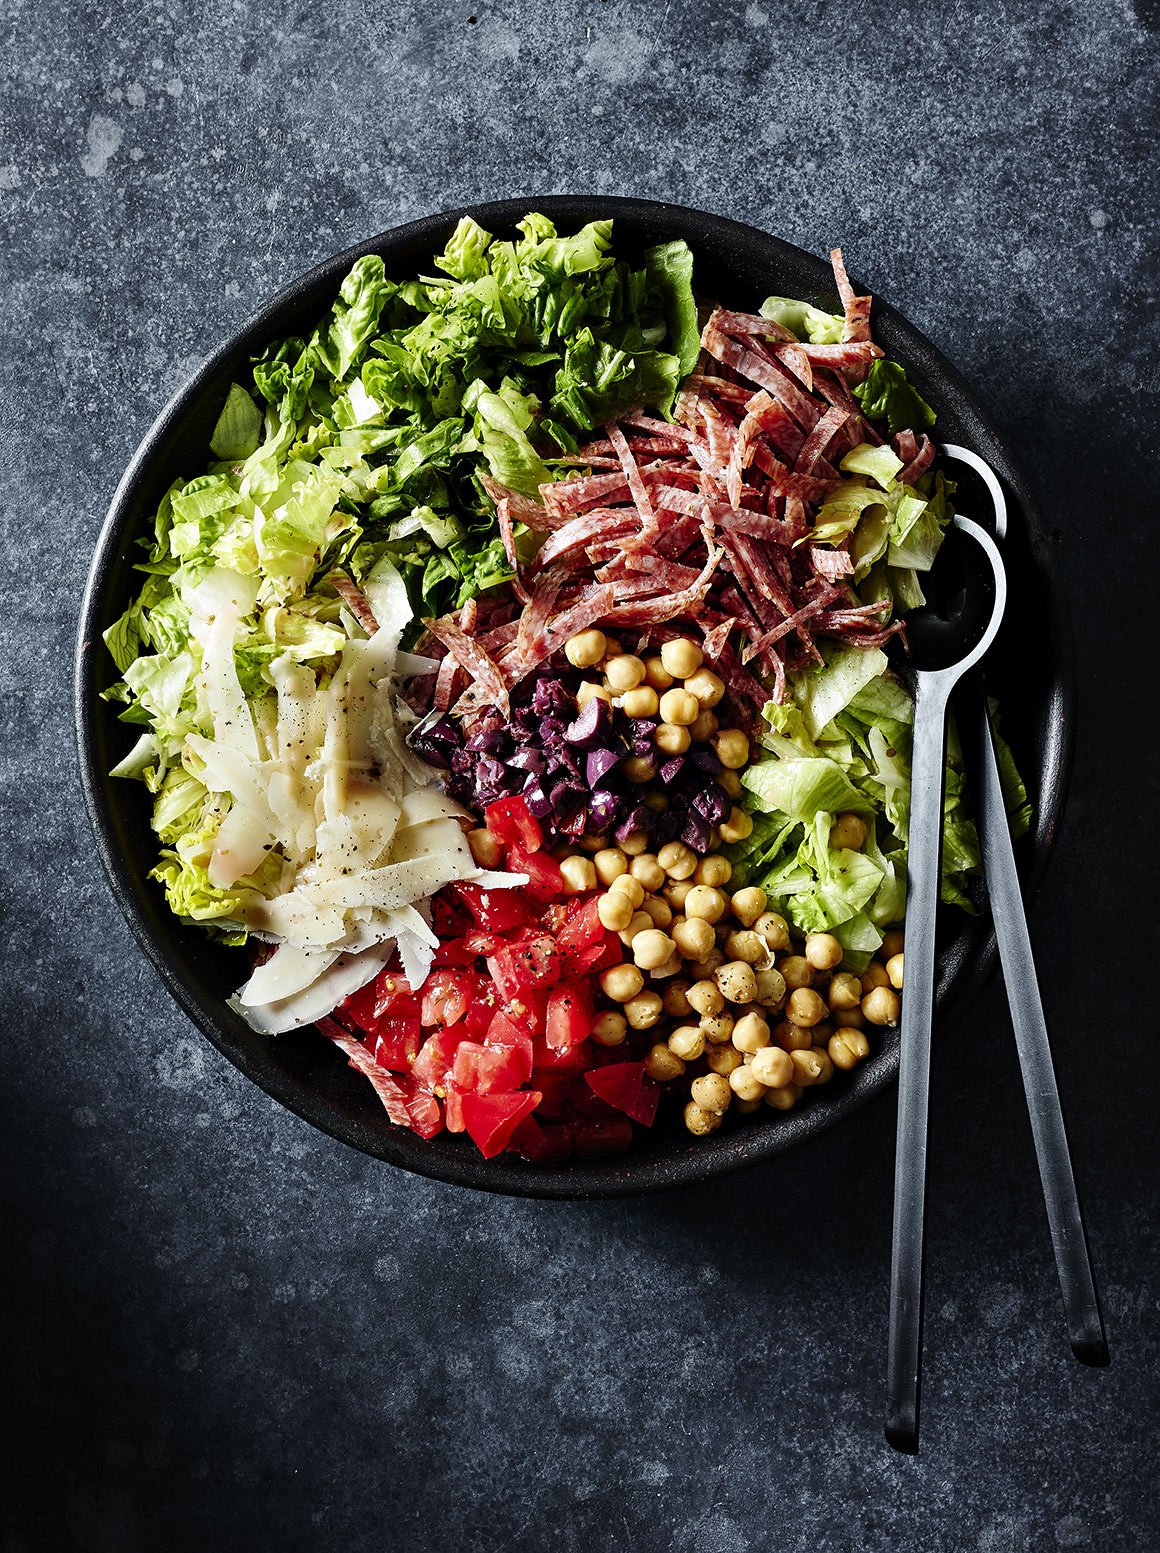 Chop-Salad-Chocolate-chickpea-salami-protine-cook-book-recipe-intuitive-eating-diet-kale-junkie-heath-wellness-food-photographer-kolenko.jpg